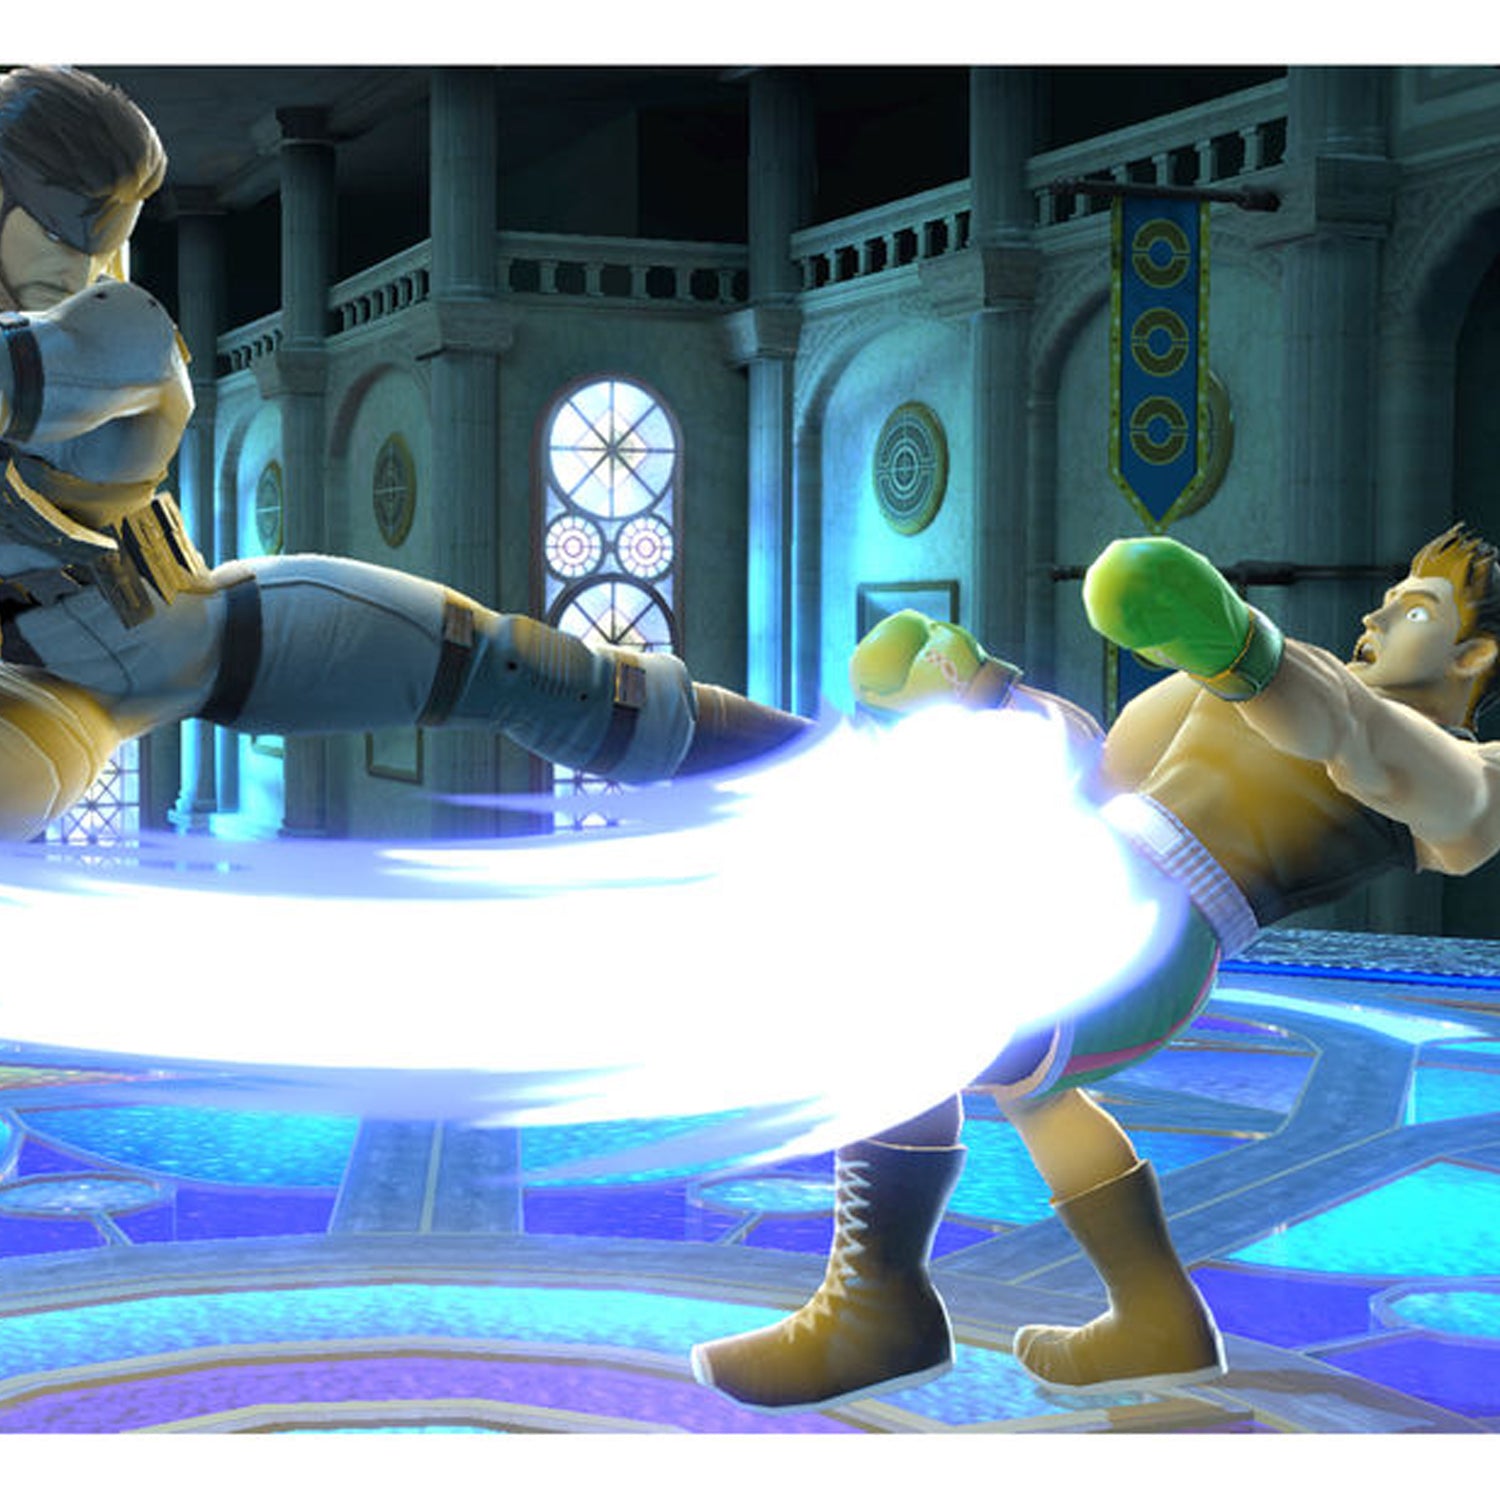 Nintendo Switch Luigi's Mansion 3 Bundle with Super Smash Bros. Ultimate